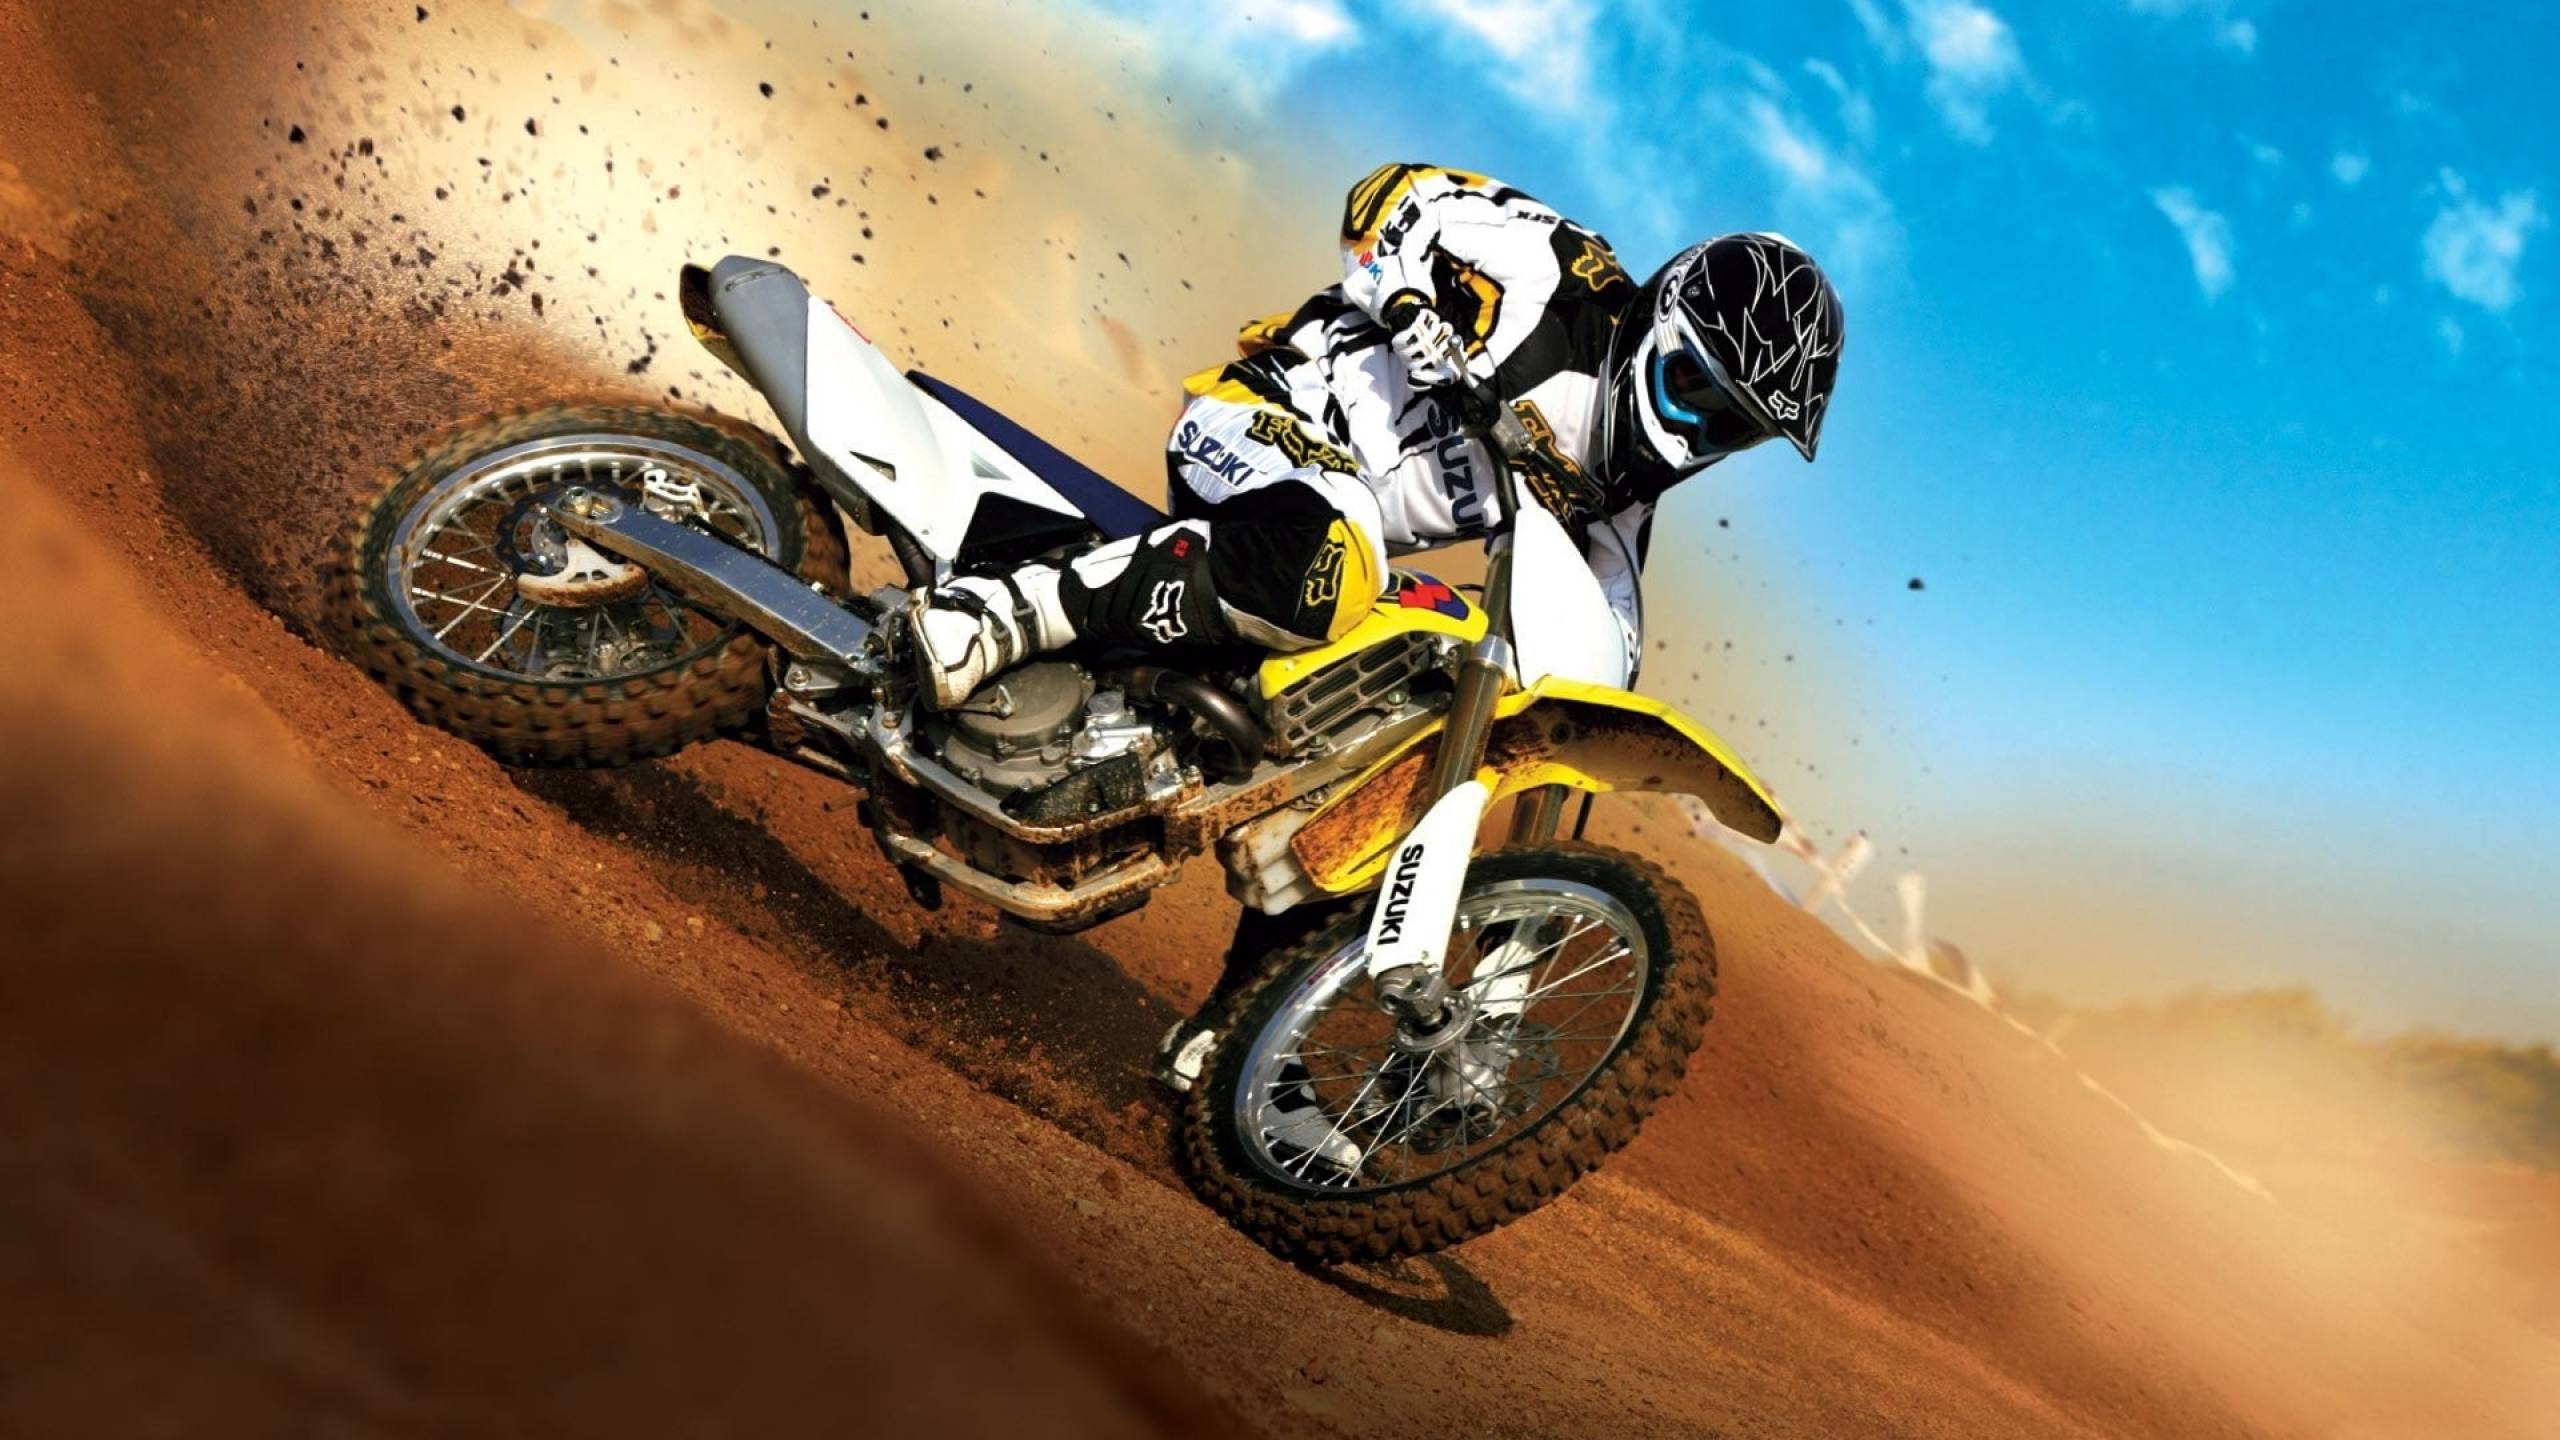 Motorcycle Suzuki Motocross Dirt Bikes Dirt Brown 2560x1440